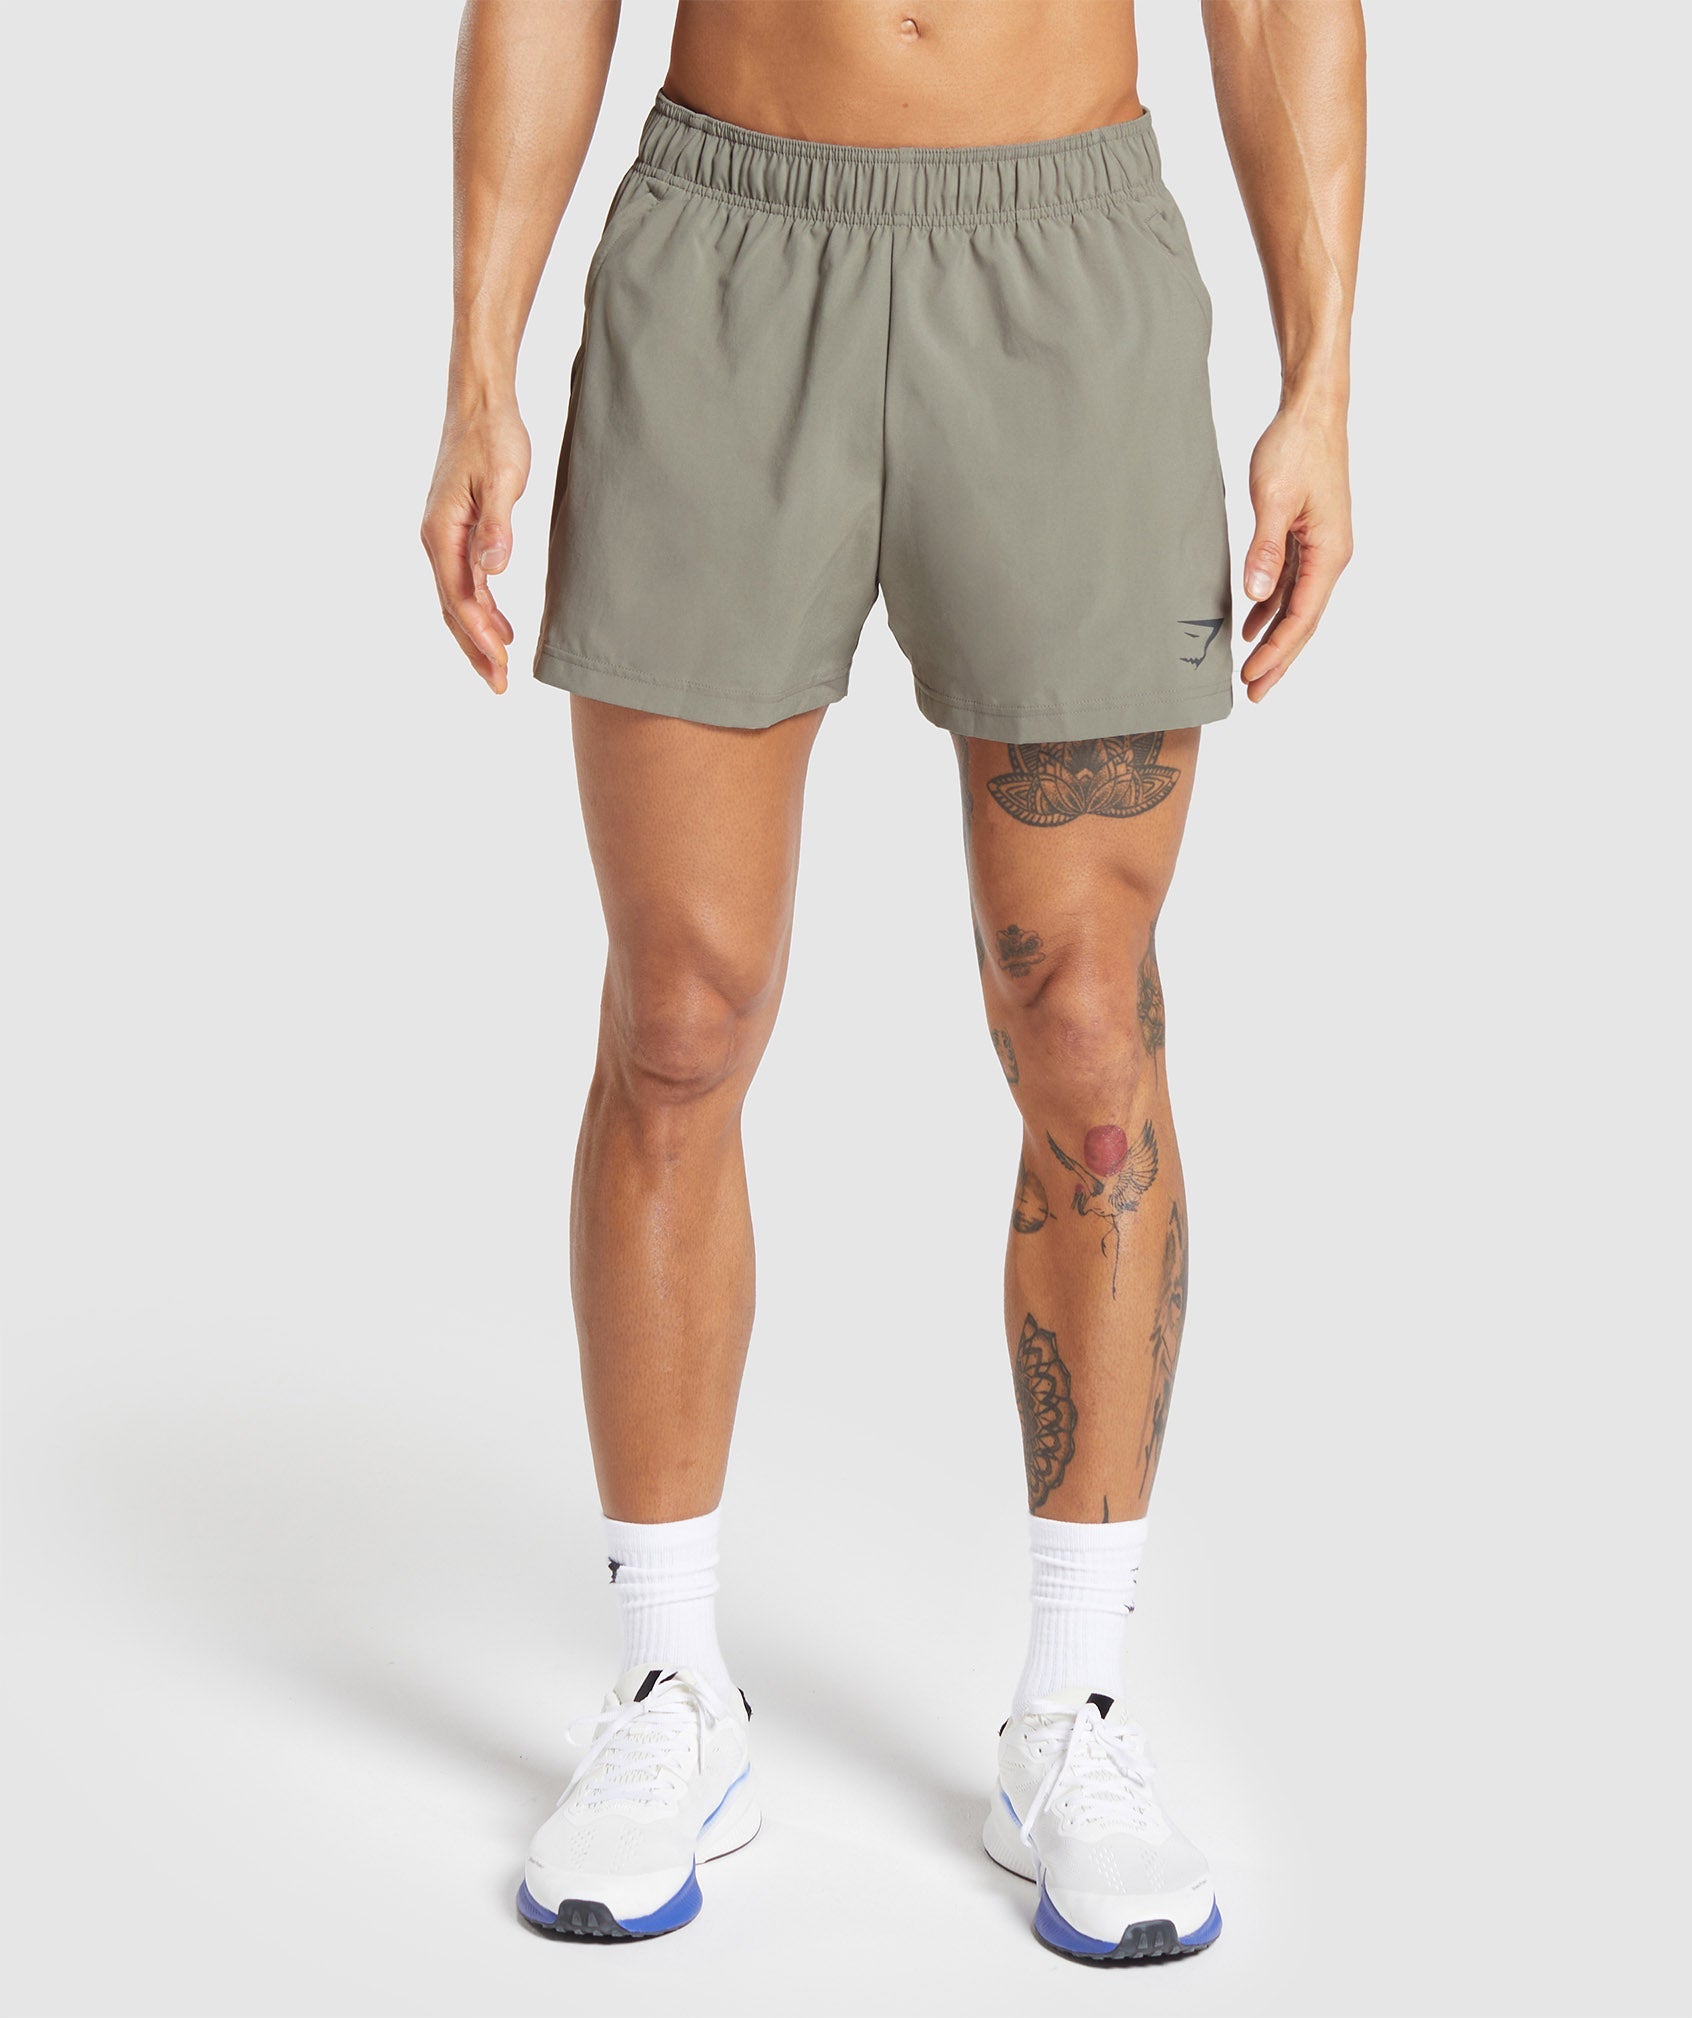 Sport 5" Shorts in Linen Brown/Dark Grey - view 1